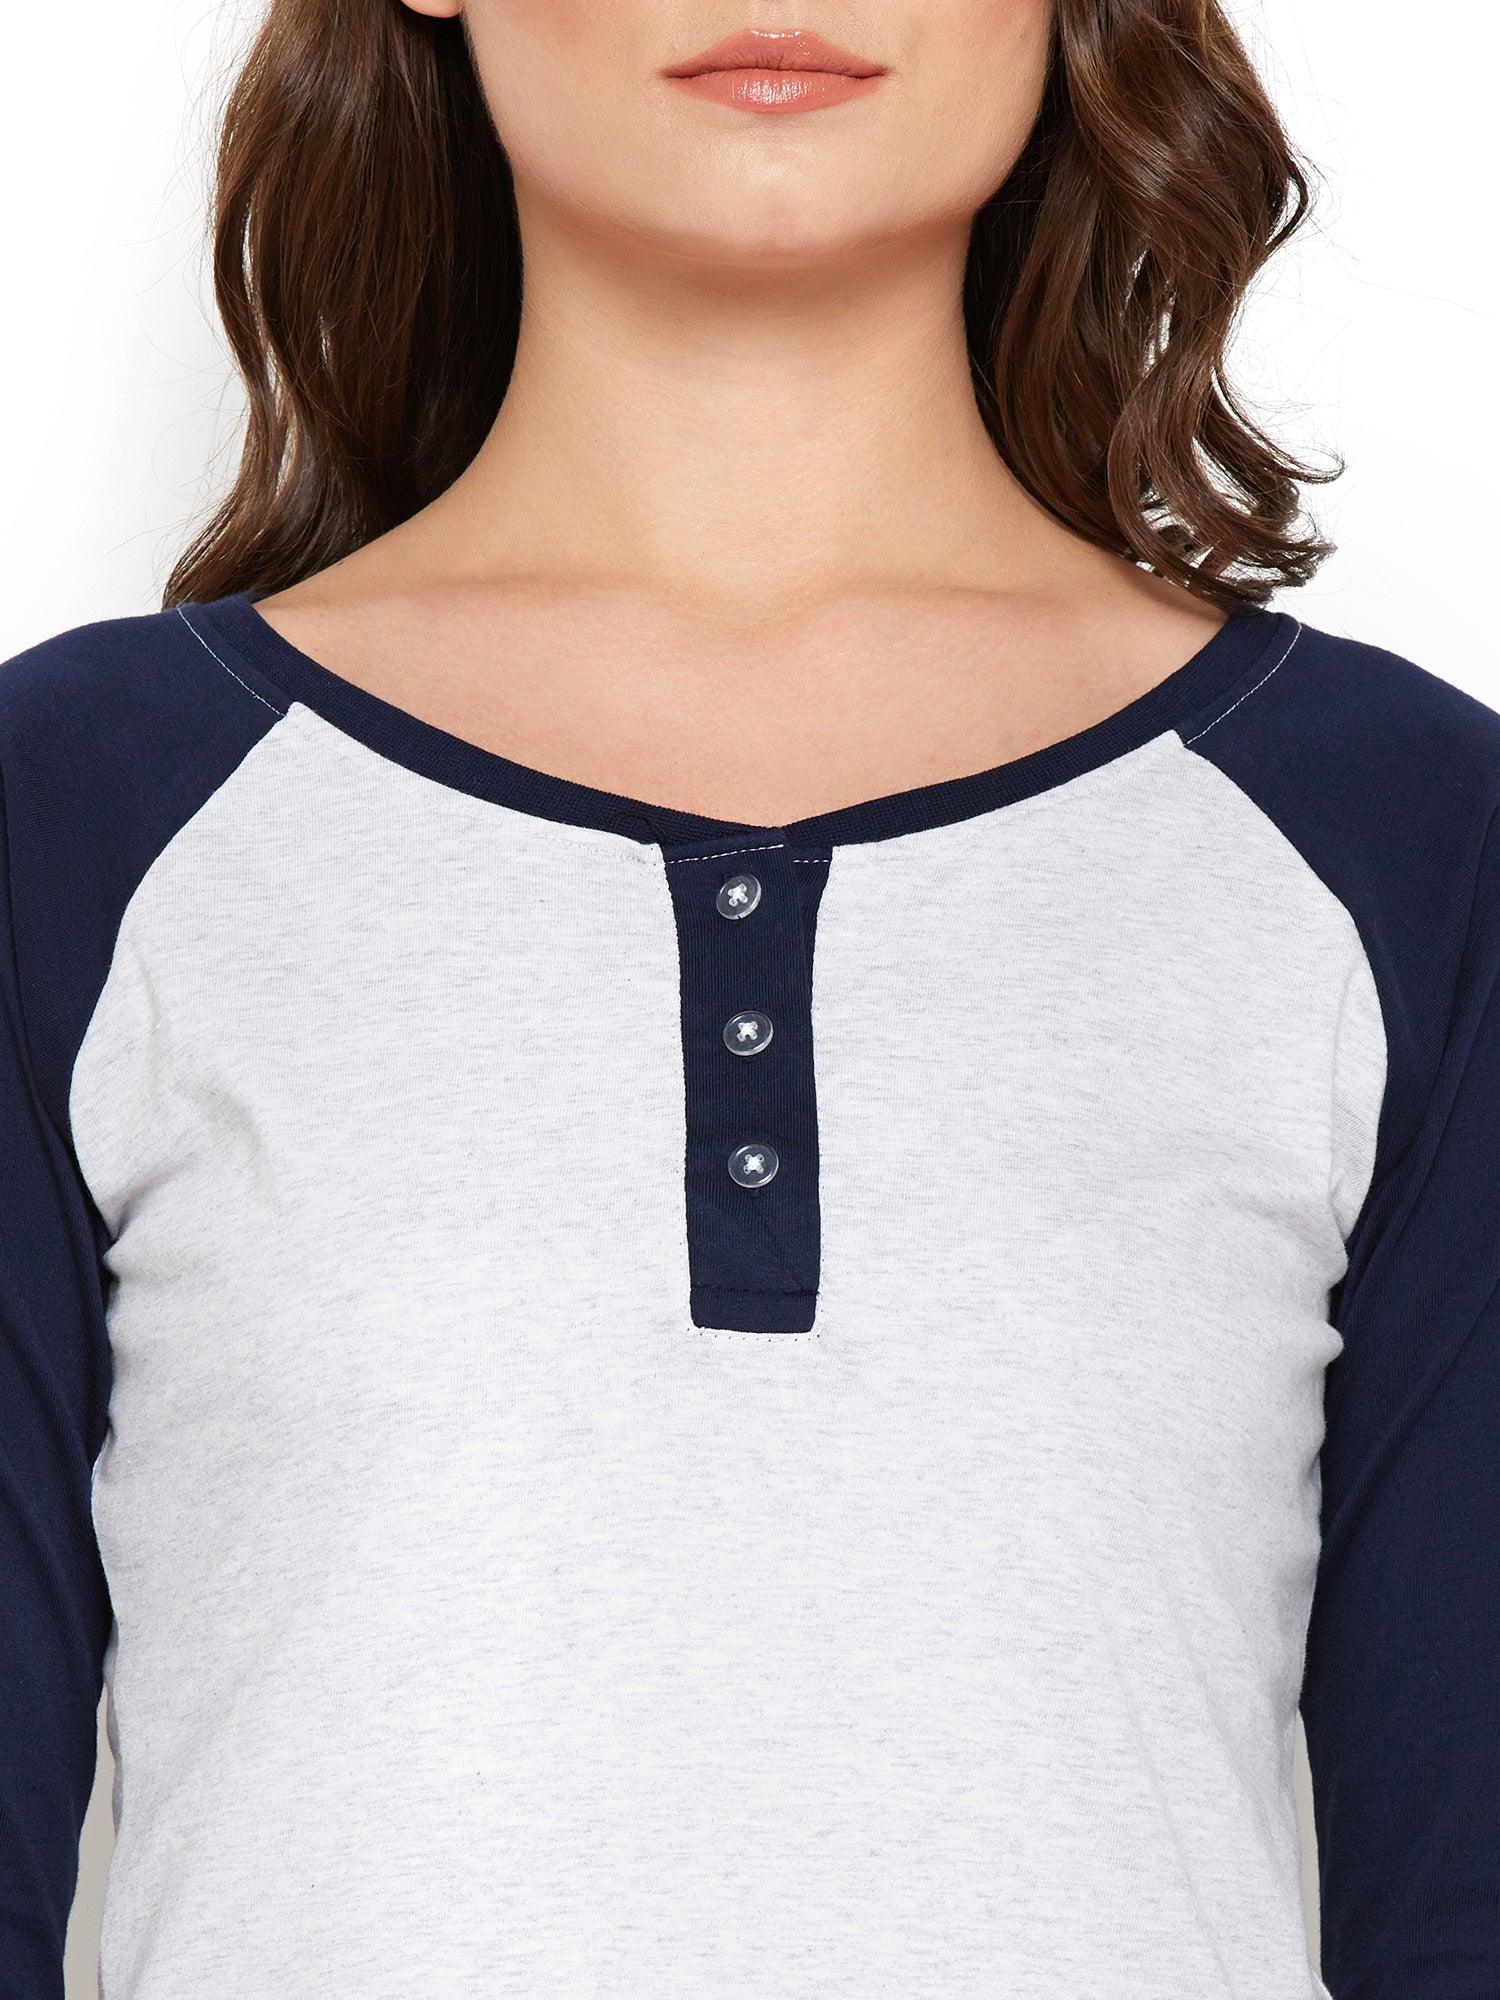 Women White and Navy blue Round Neck T-shirt - Znxclothing